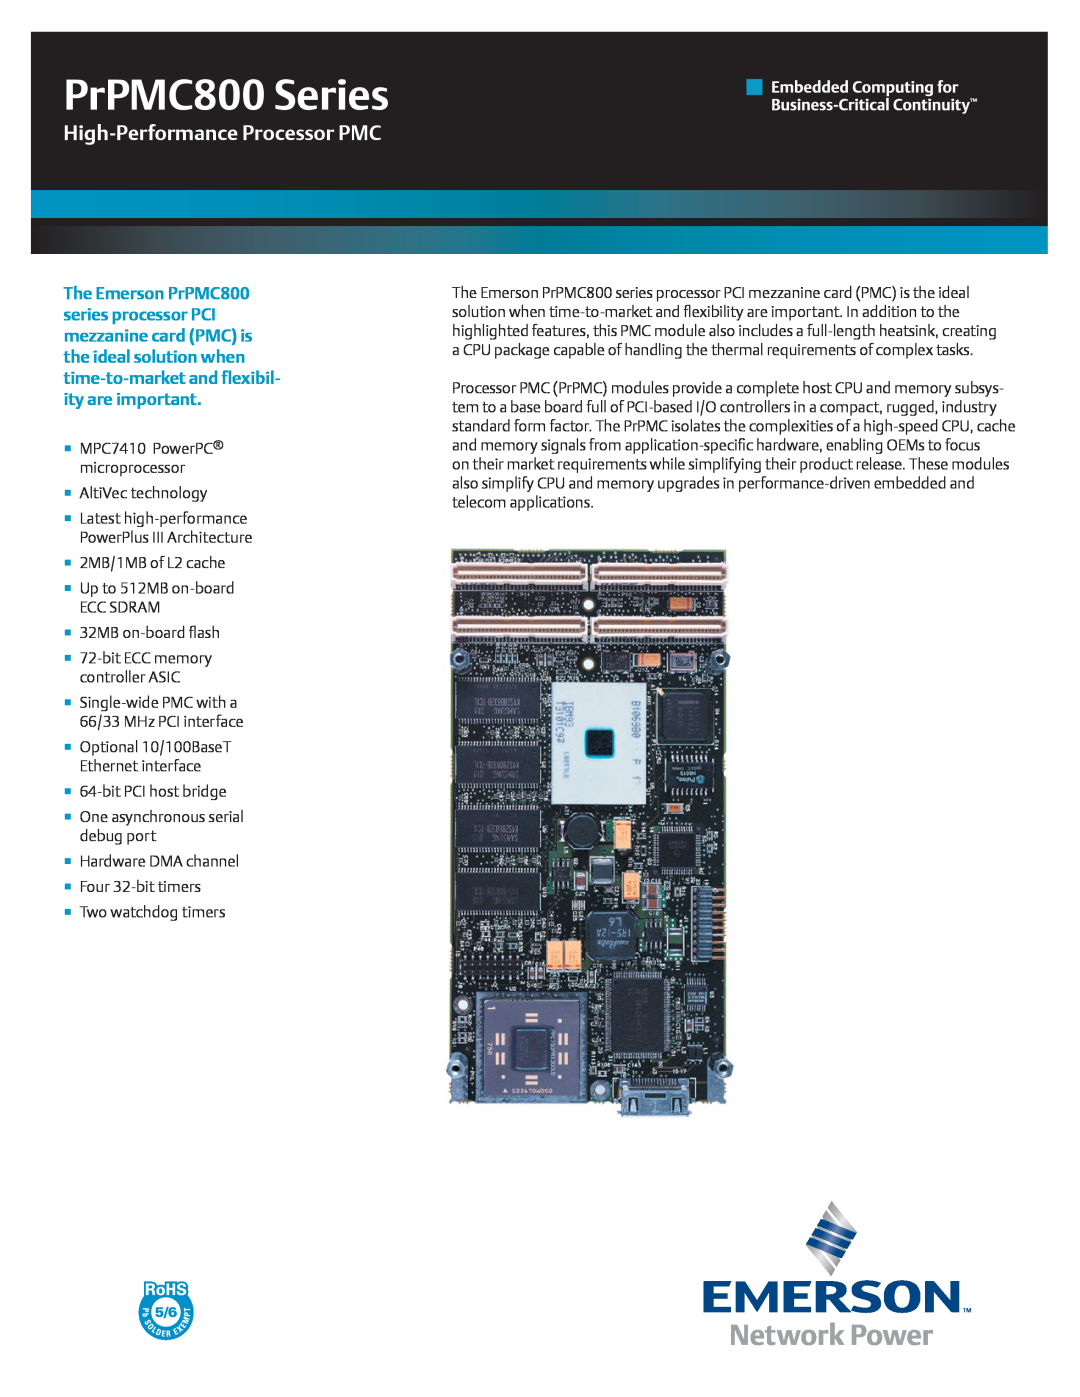 Emerson manual PrPMC800 Series, High-PerformanceProcessor PMC 